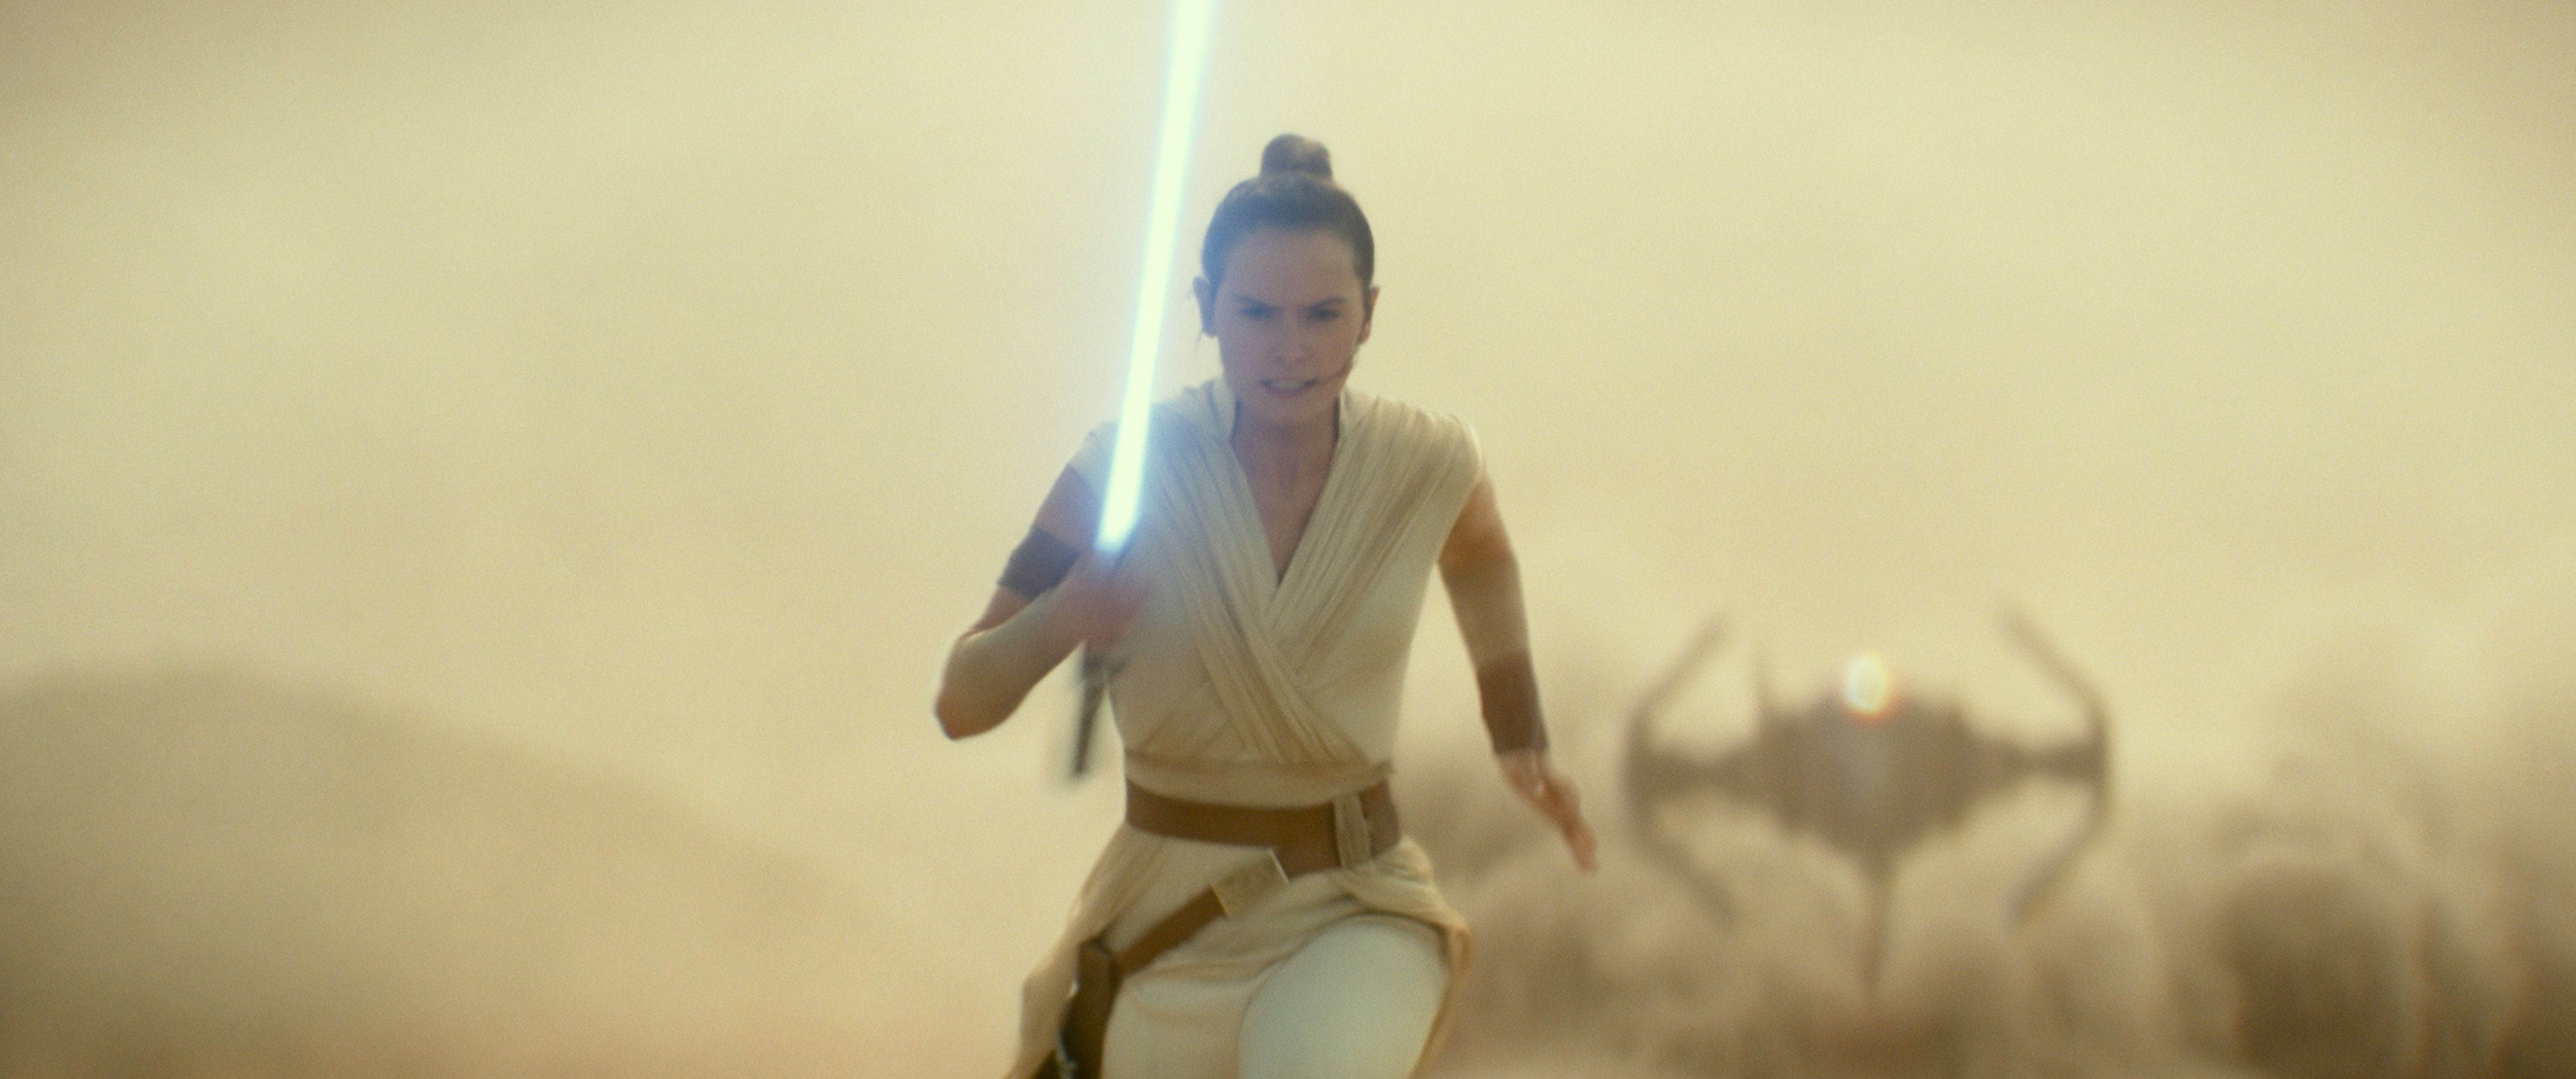 Star Wars The Rise of Skywalker trailer image #10